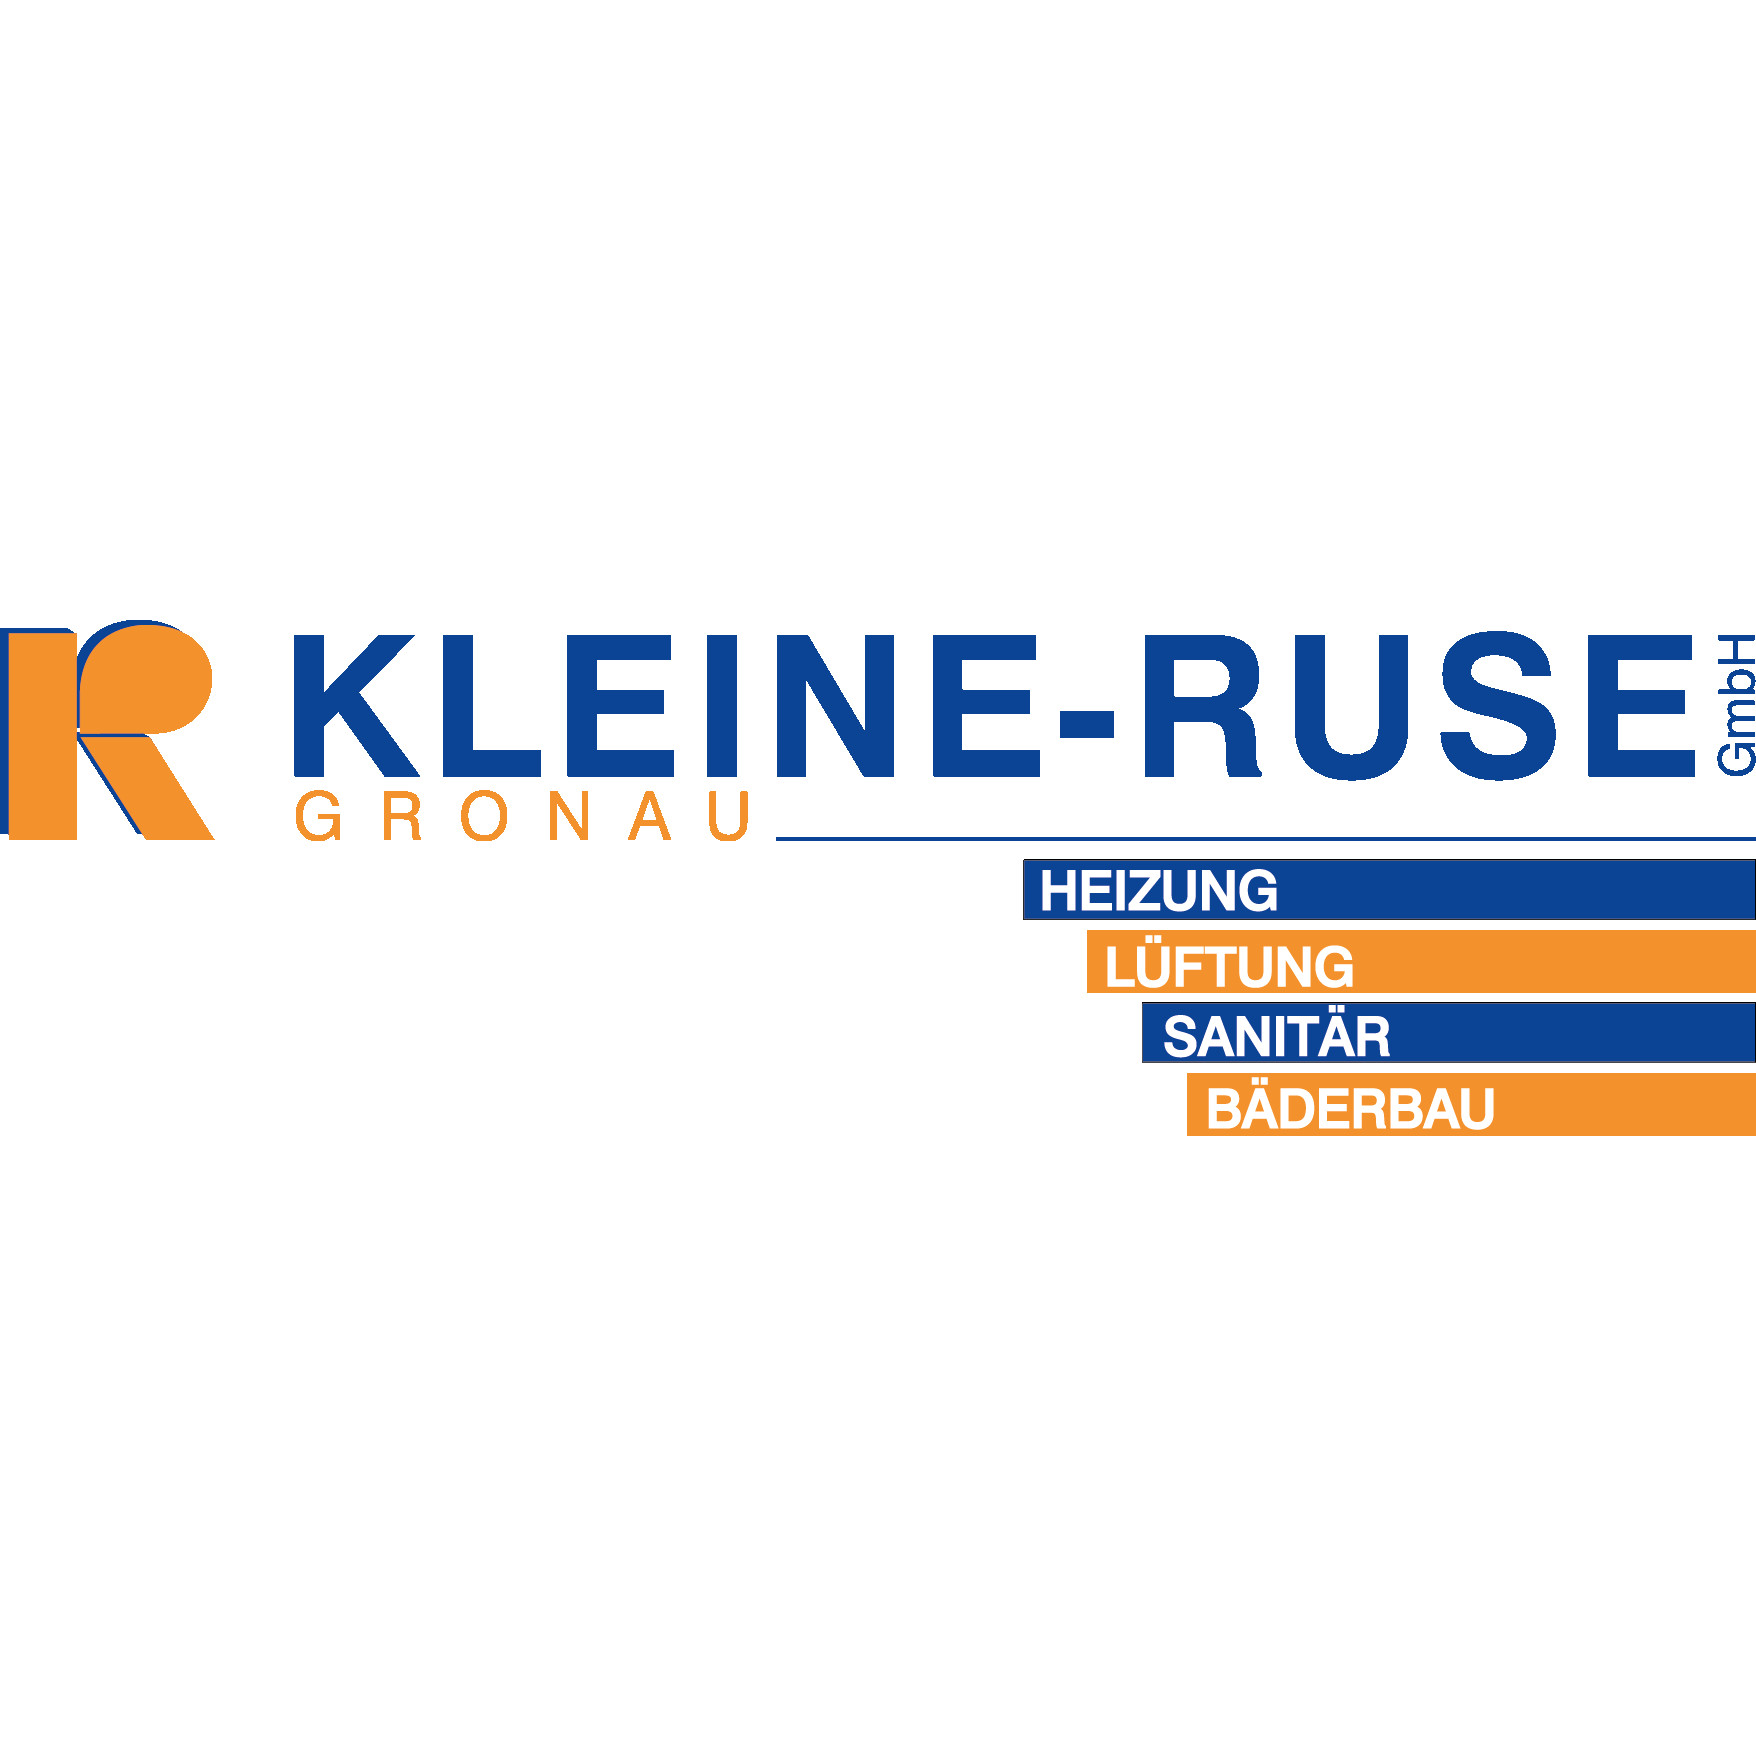 Kleine-Ruse GmbH DIE BADGESTALTER - Gronau logo